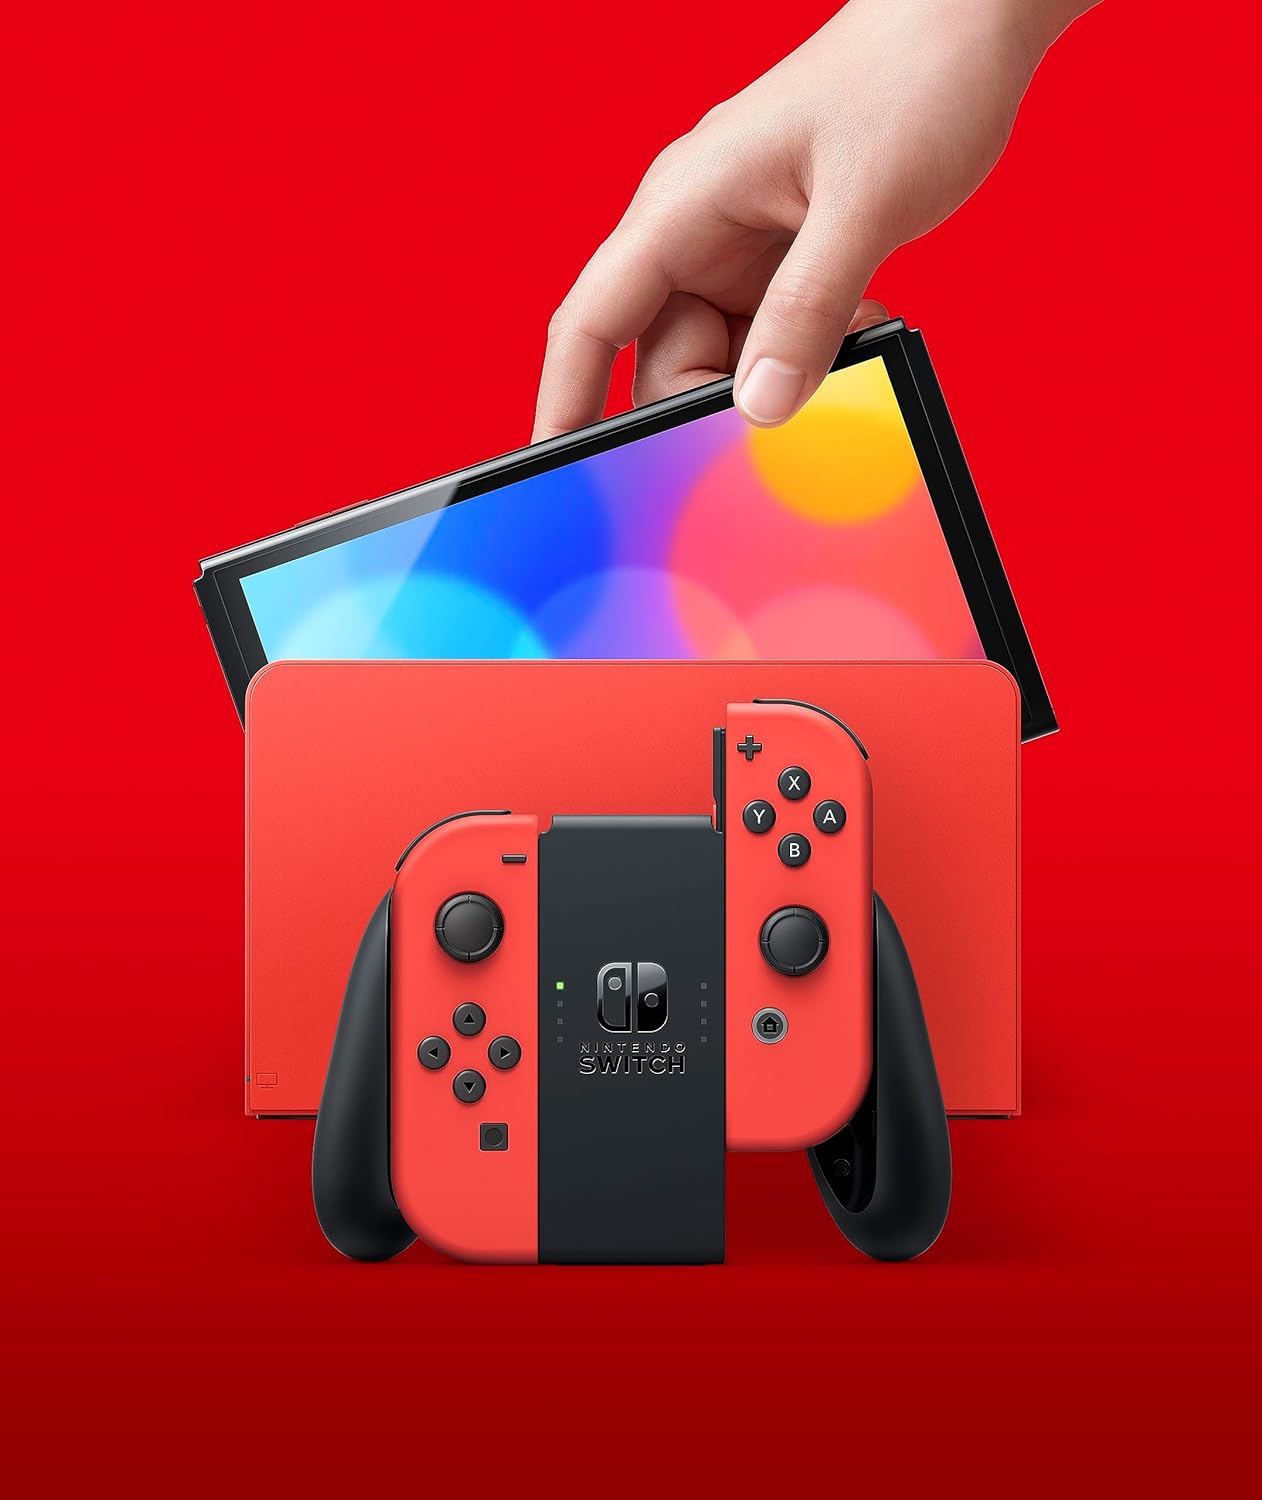 Nintendo Switch – OLED Model Mario Red